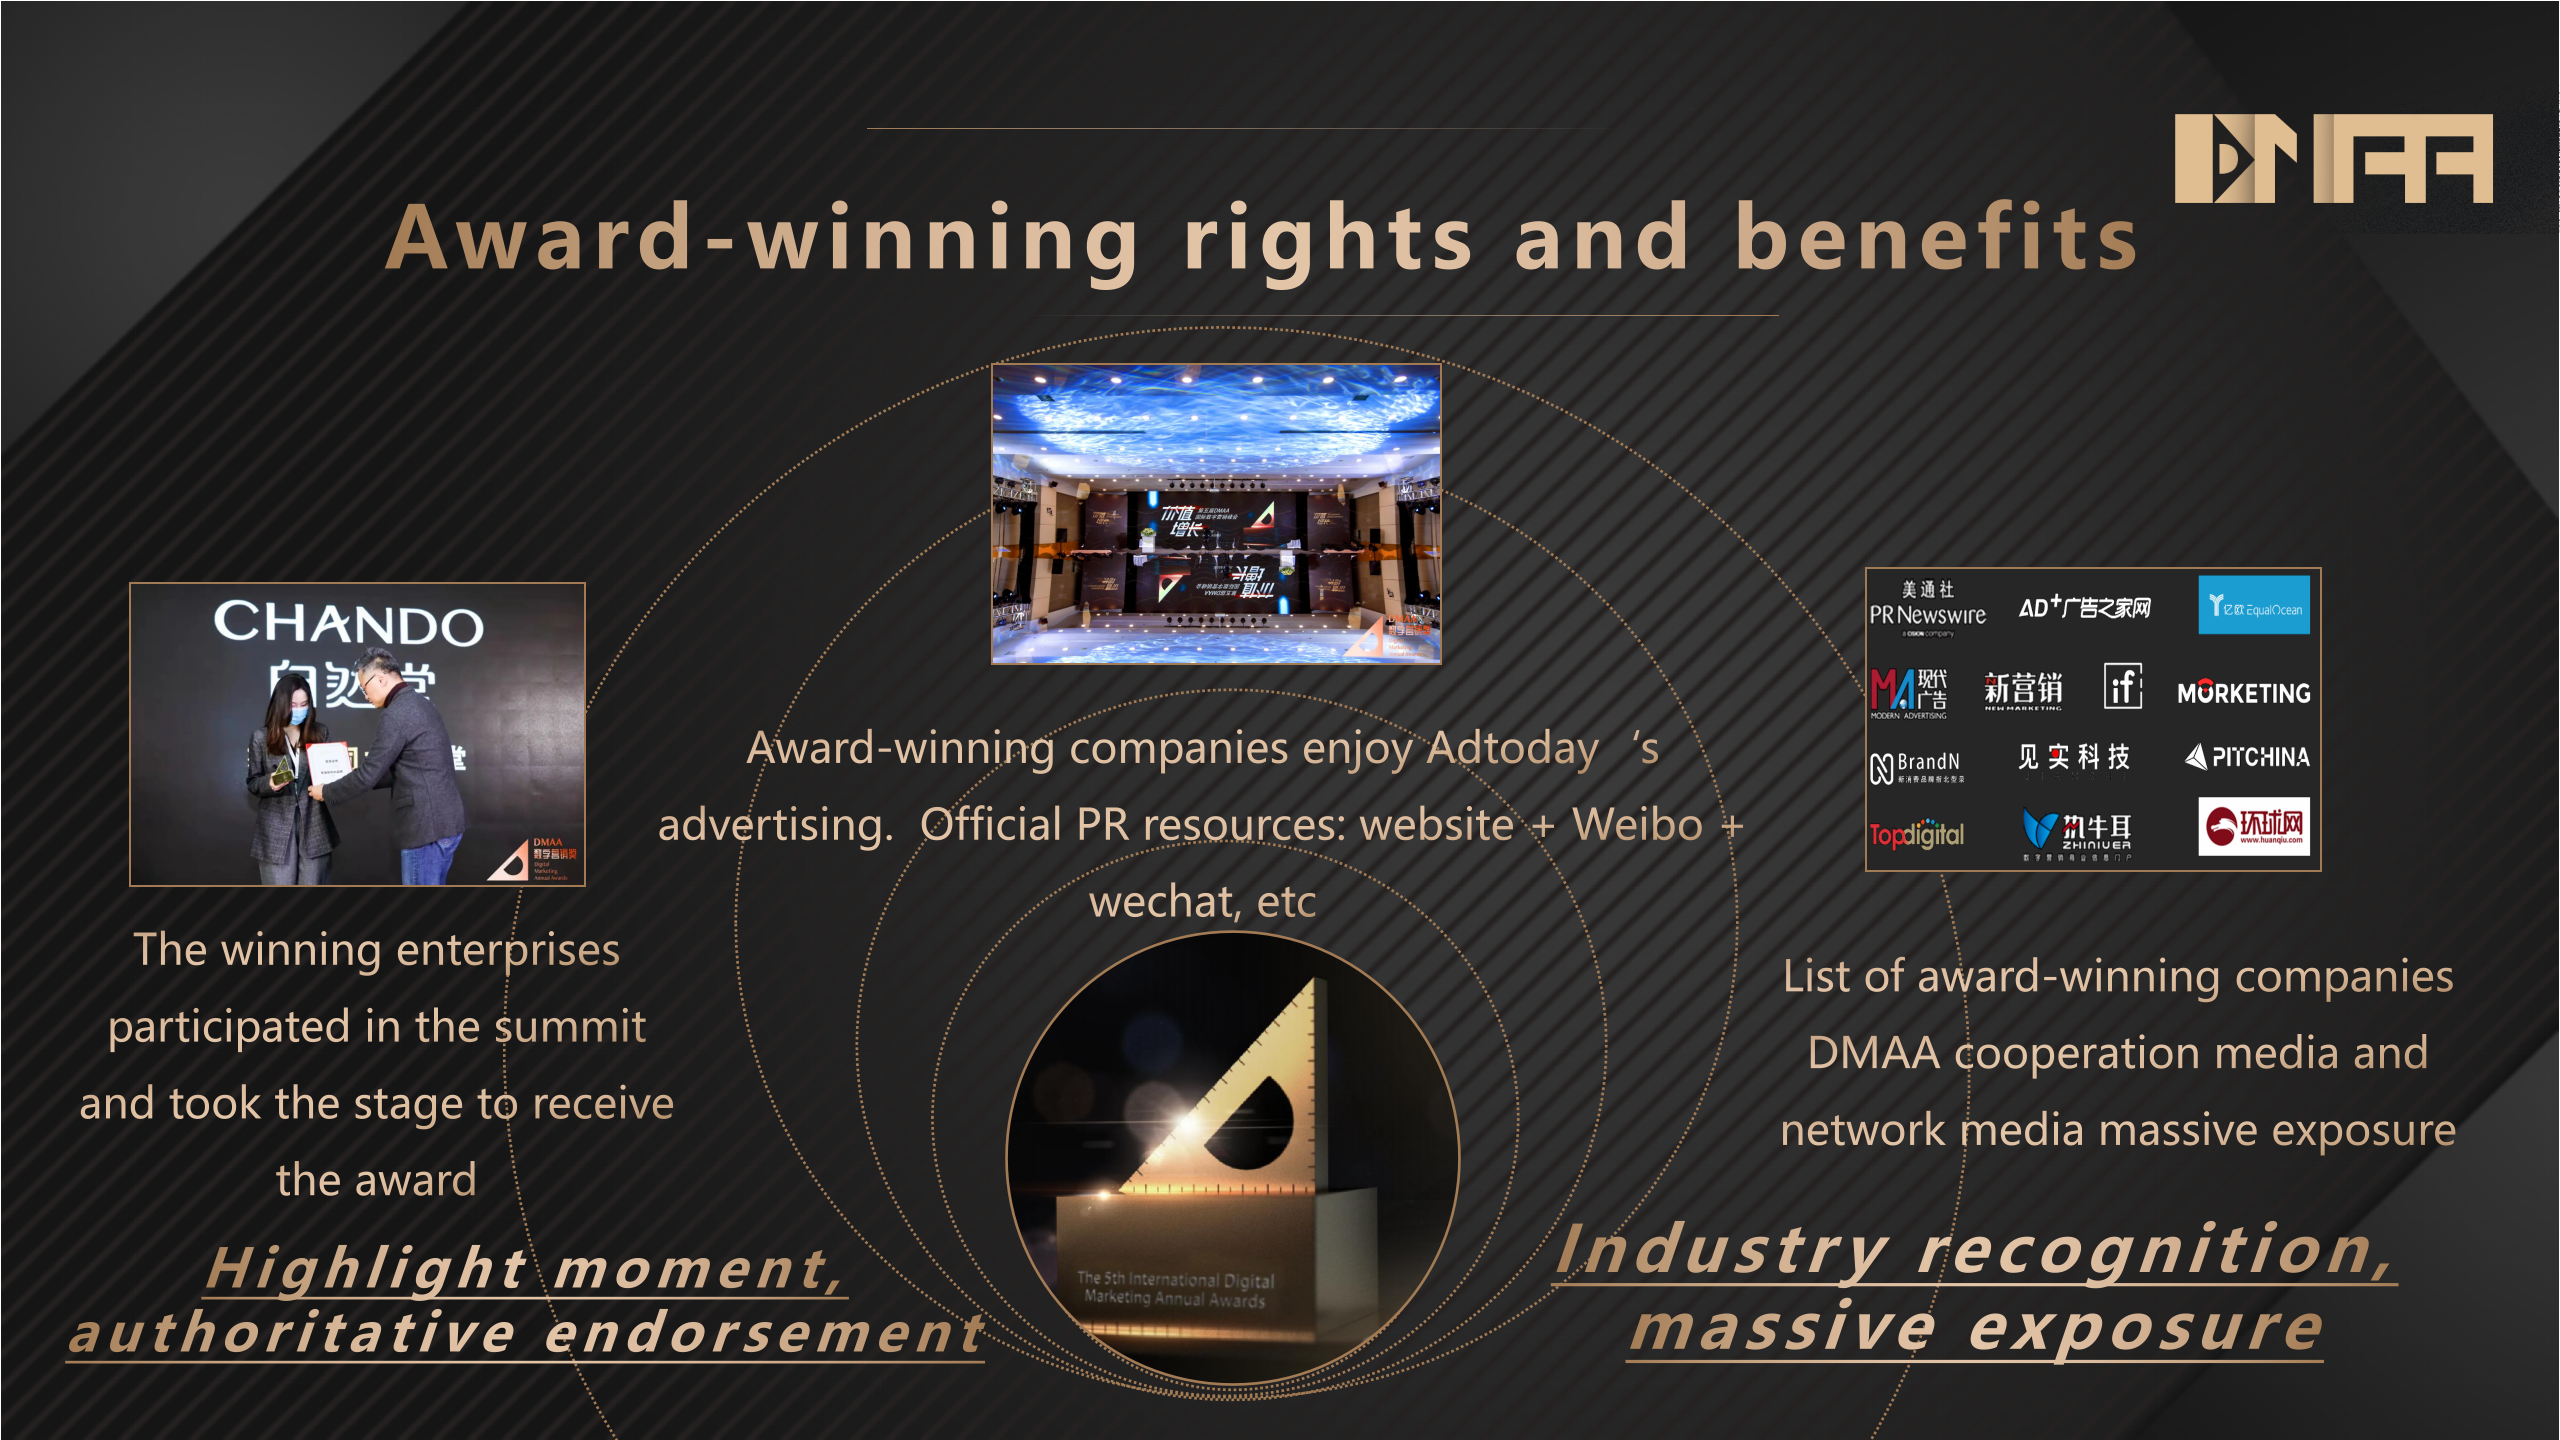 6th DMAA International Digital Marketing Awards